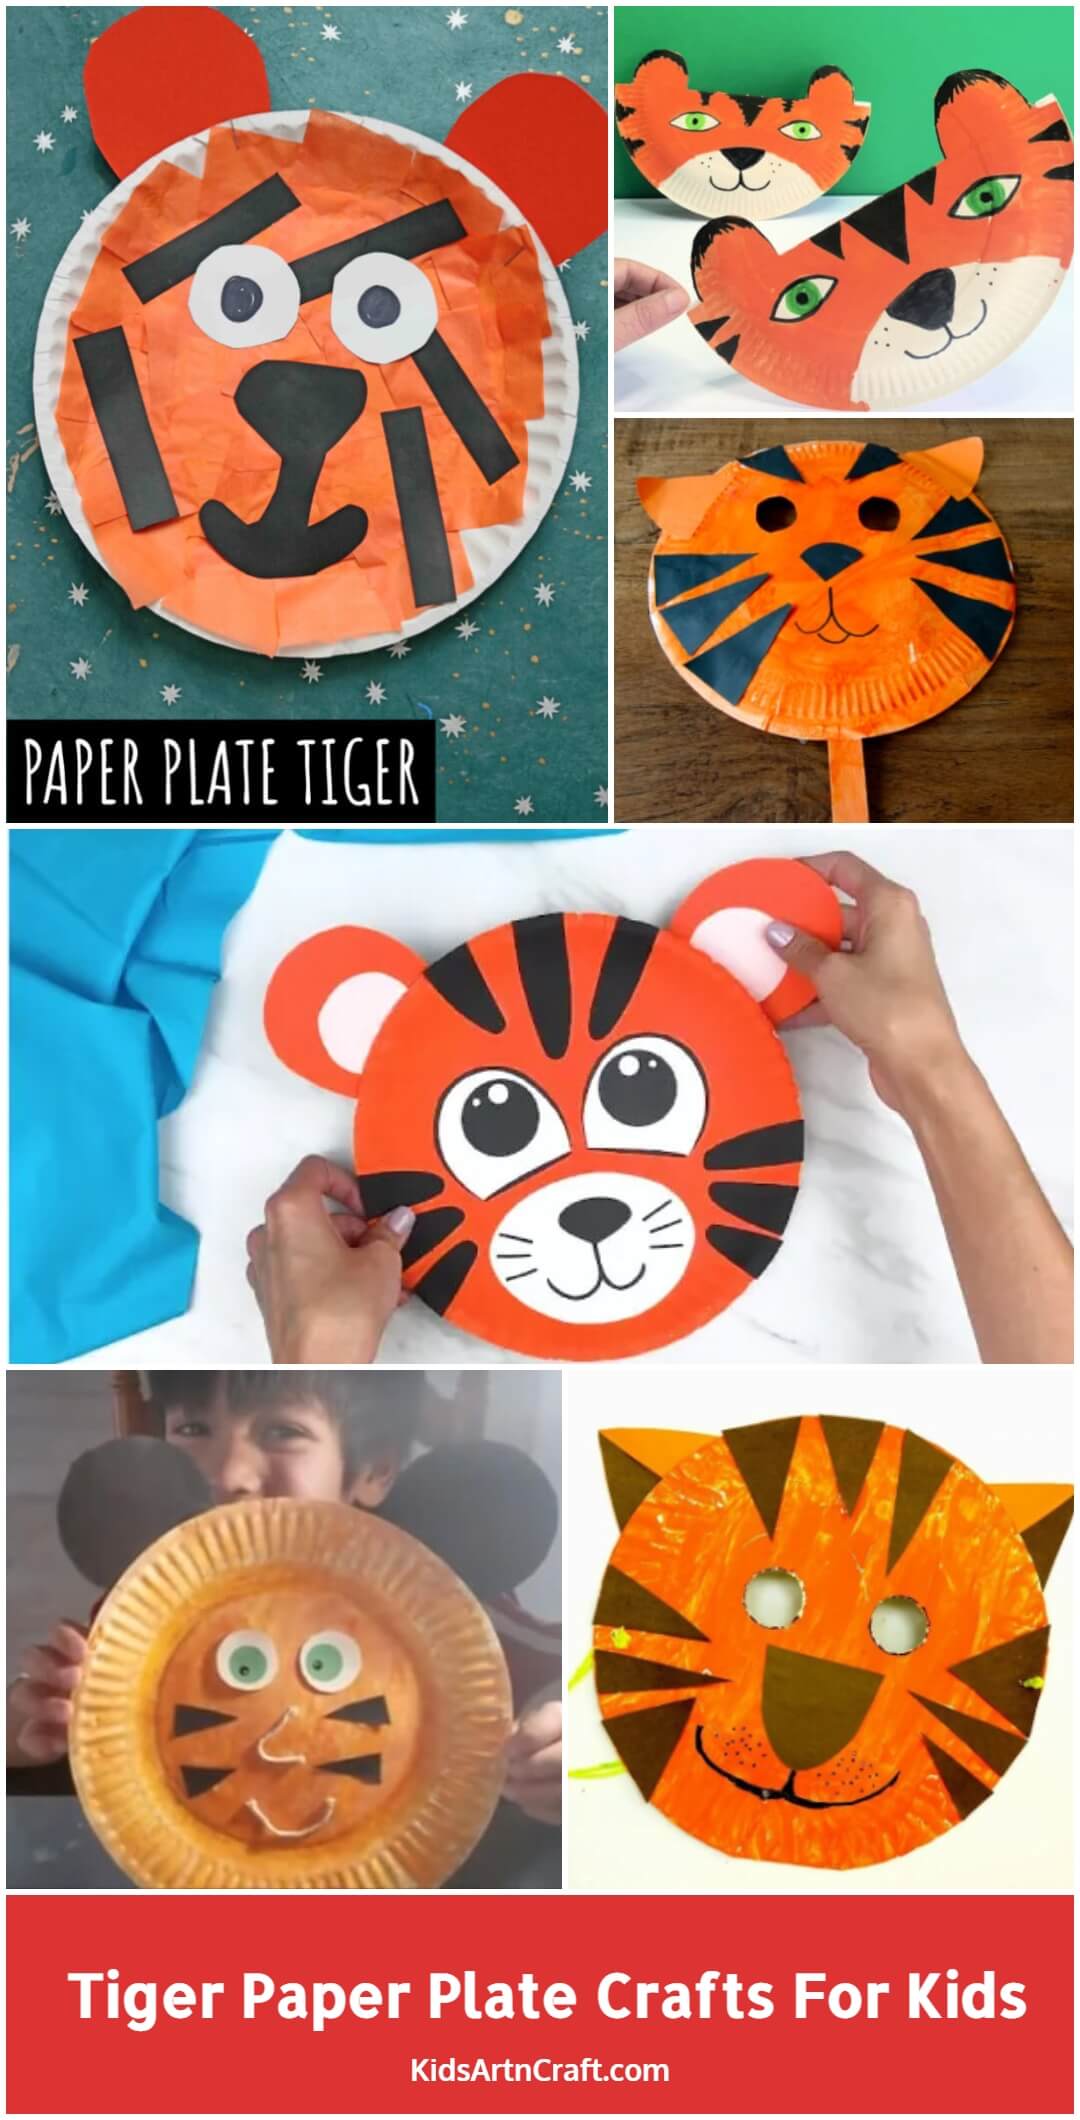 Tiger Paper Plate Crafts For Kids